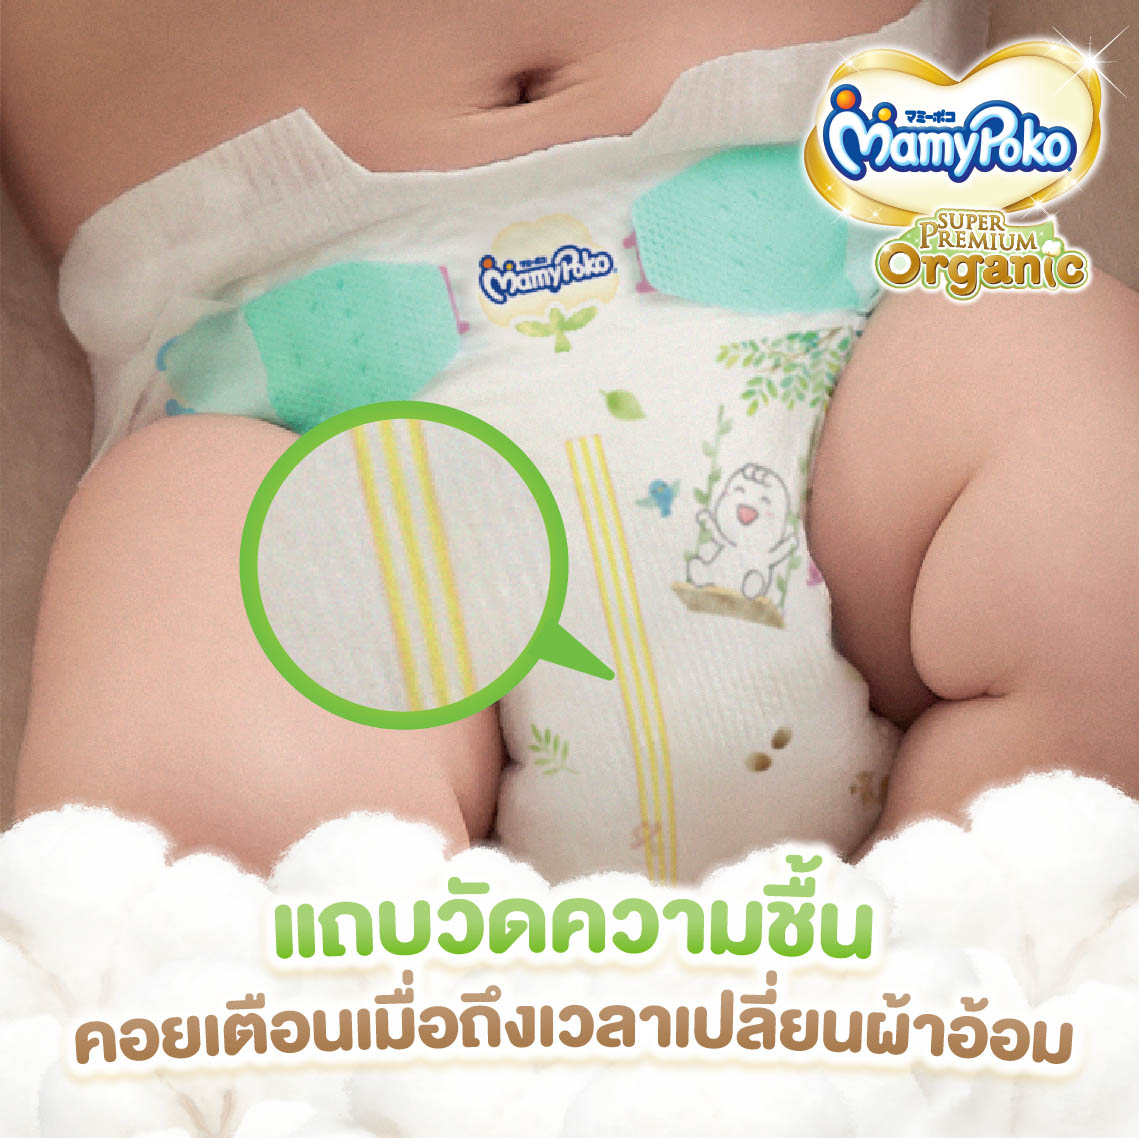 MamyPoko Super Premium Organic ผ้าอ้อมเด็กแบบเทป มามี่โพโค มามี่โพโค ซุปเปอร์ พรีเมี่ยม ออร์แกนิค ไซส์ New born (แรกเกิด) จำนวน 84 ชิ้น